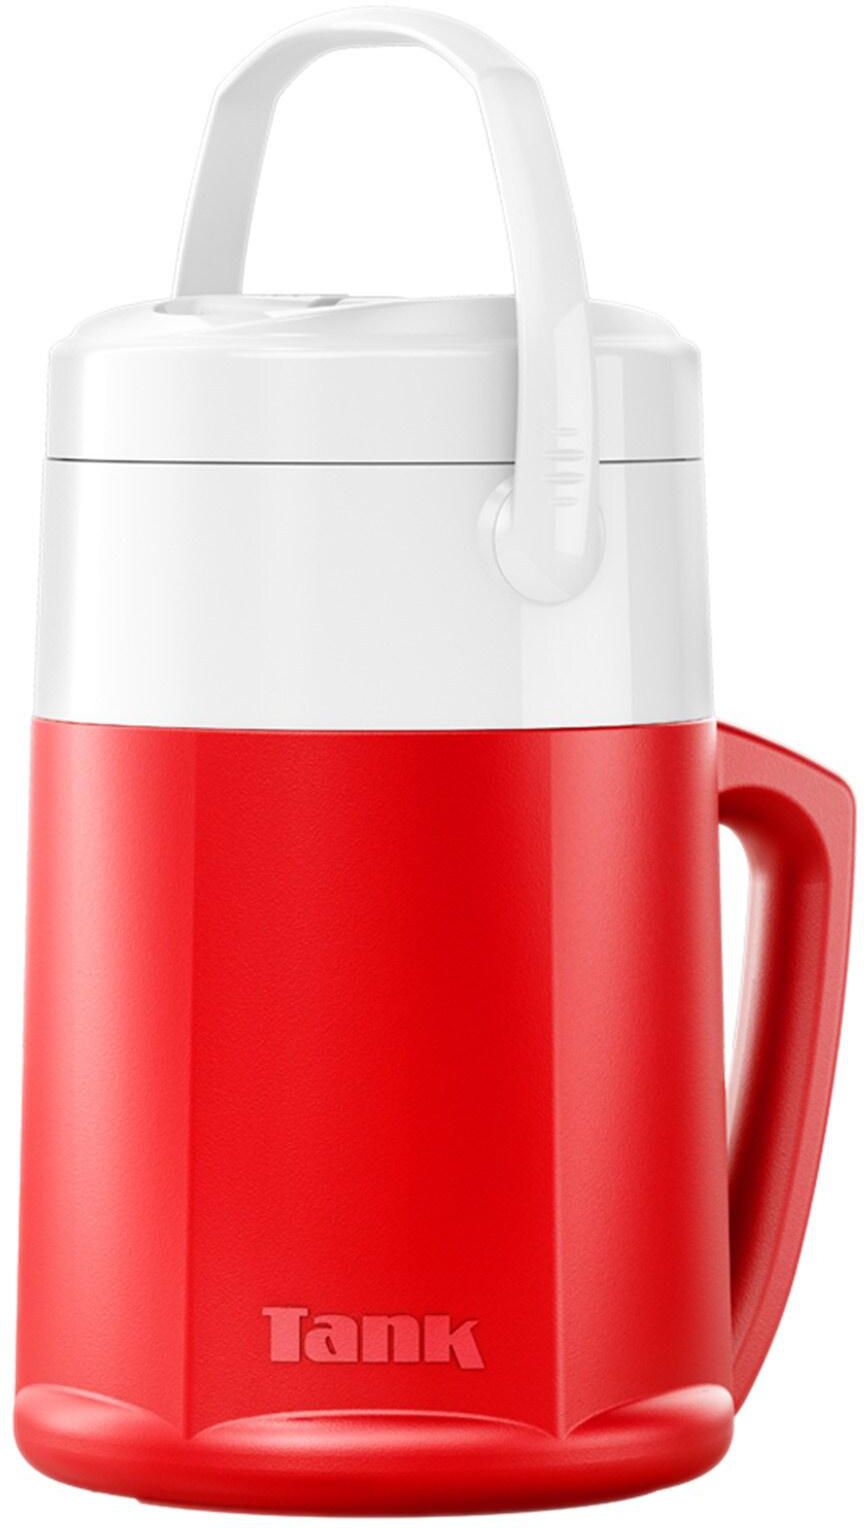 Tank Ice Tank Iced Beverage Dispenser - 2.5 Liter - Red or Blue